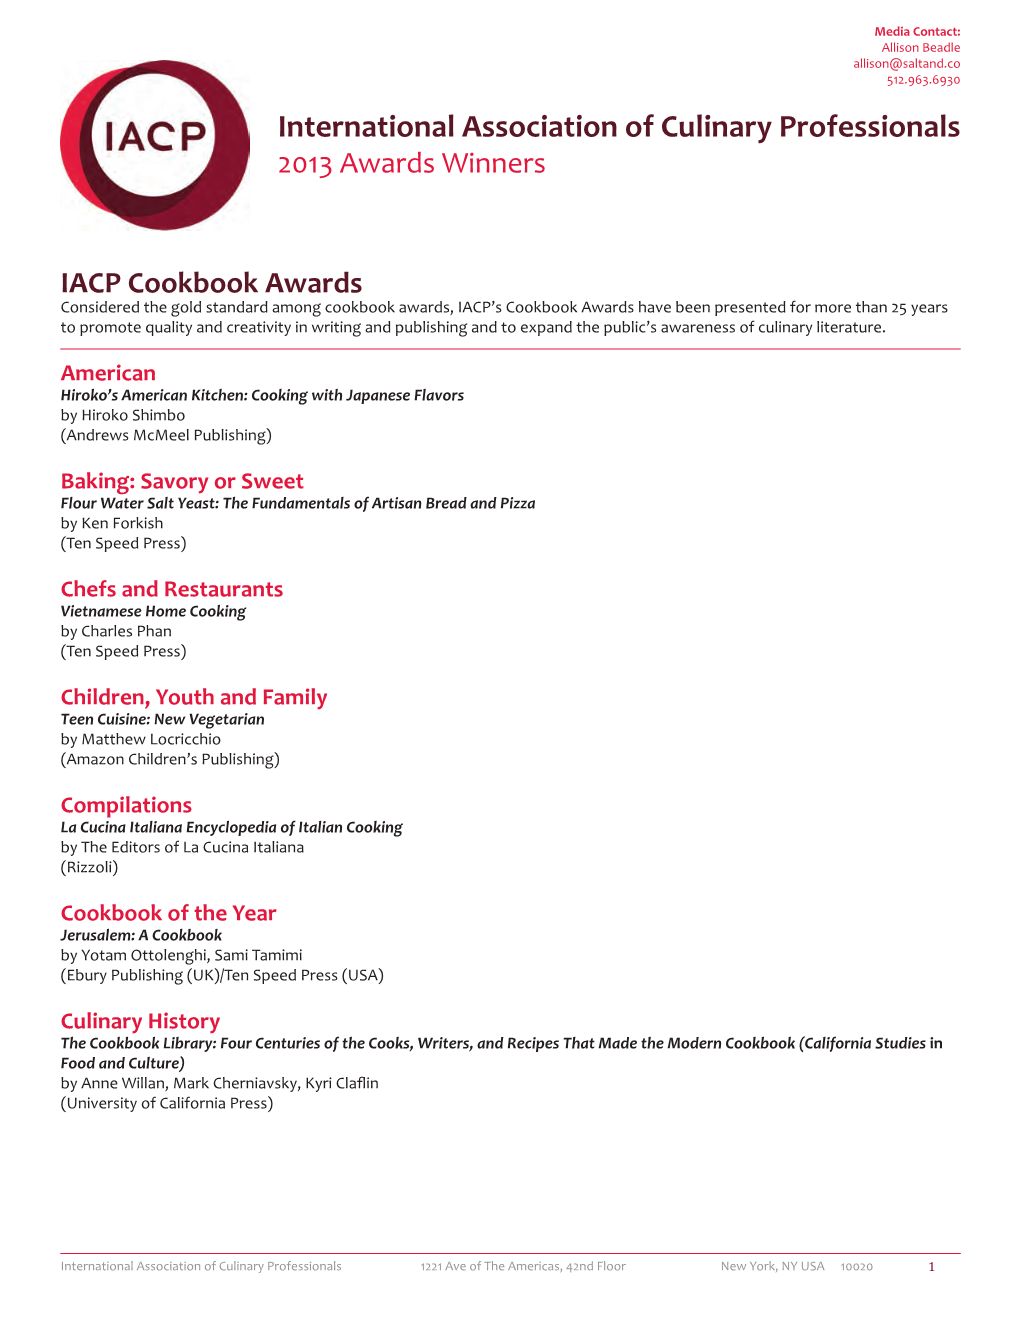 International Association of Culinary Professionals 2013 Awards Winners